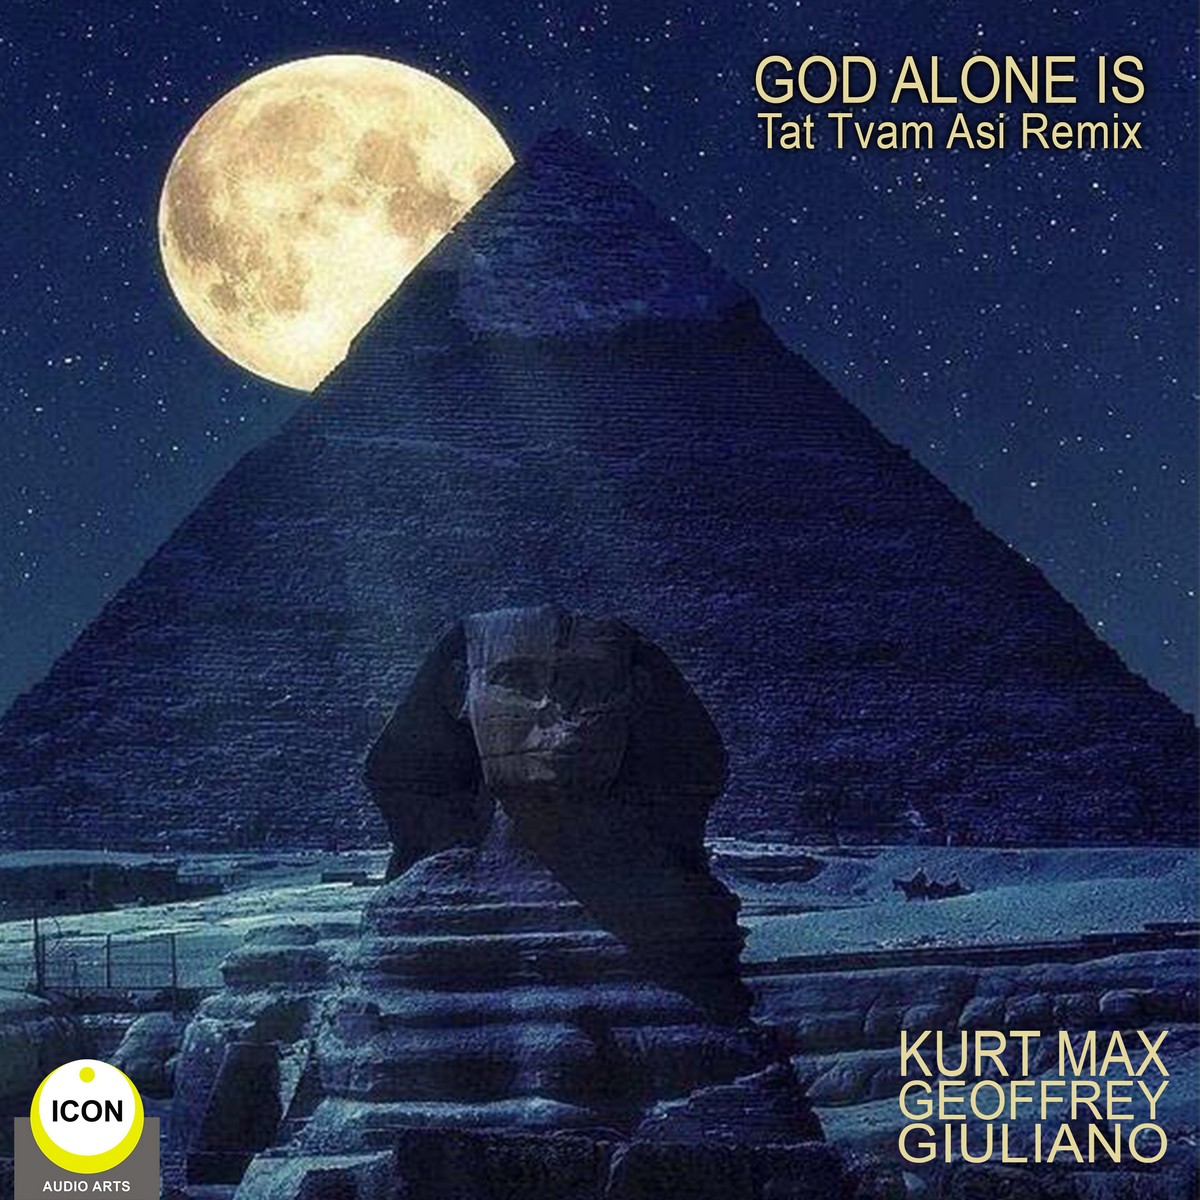 God Alone Is – Tat Tvam Asi Remix